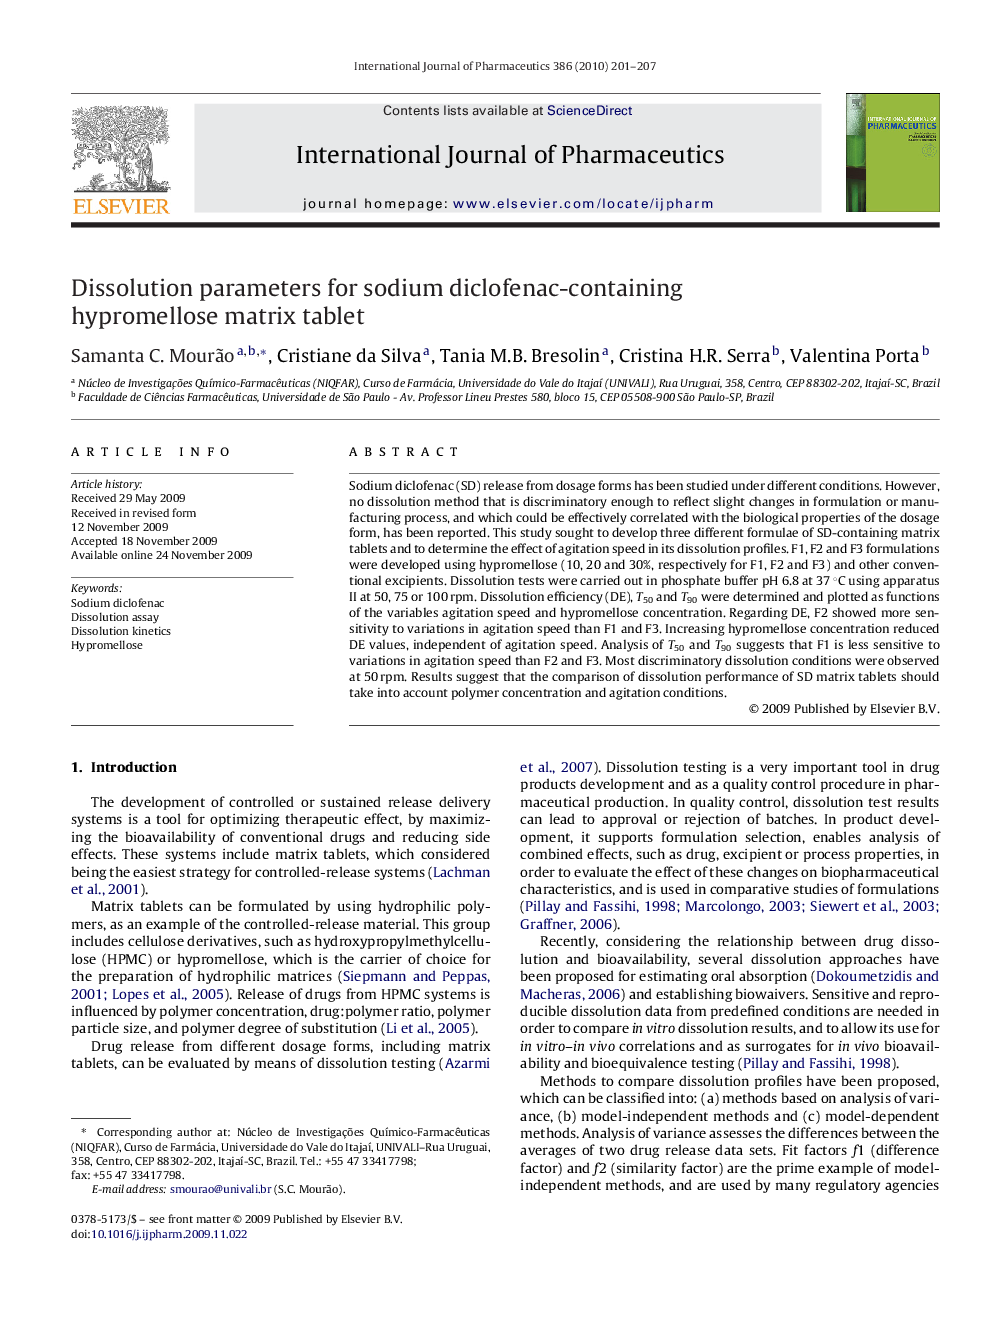 Dissolution parameters for sodium diclofenac-containing hypromellose matrix tablet